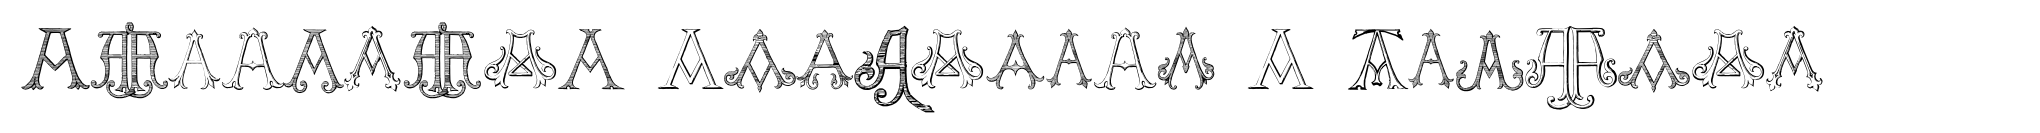 Victorian Alphabets A Regular image